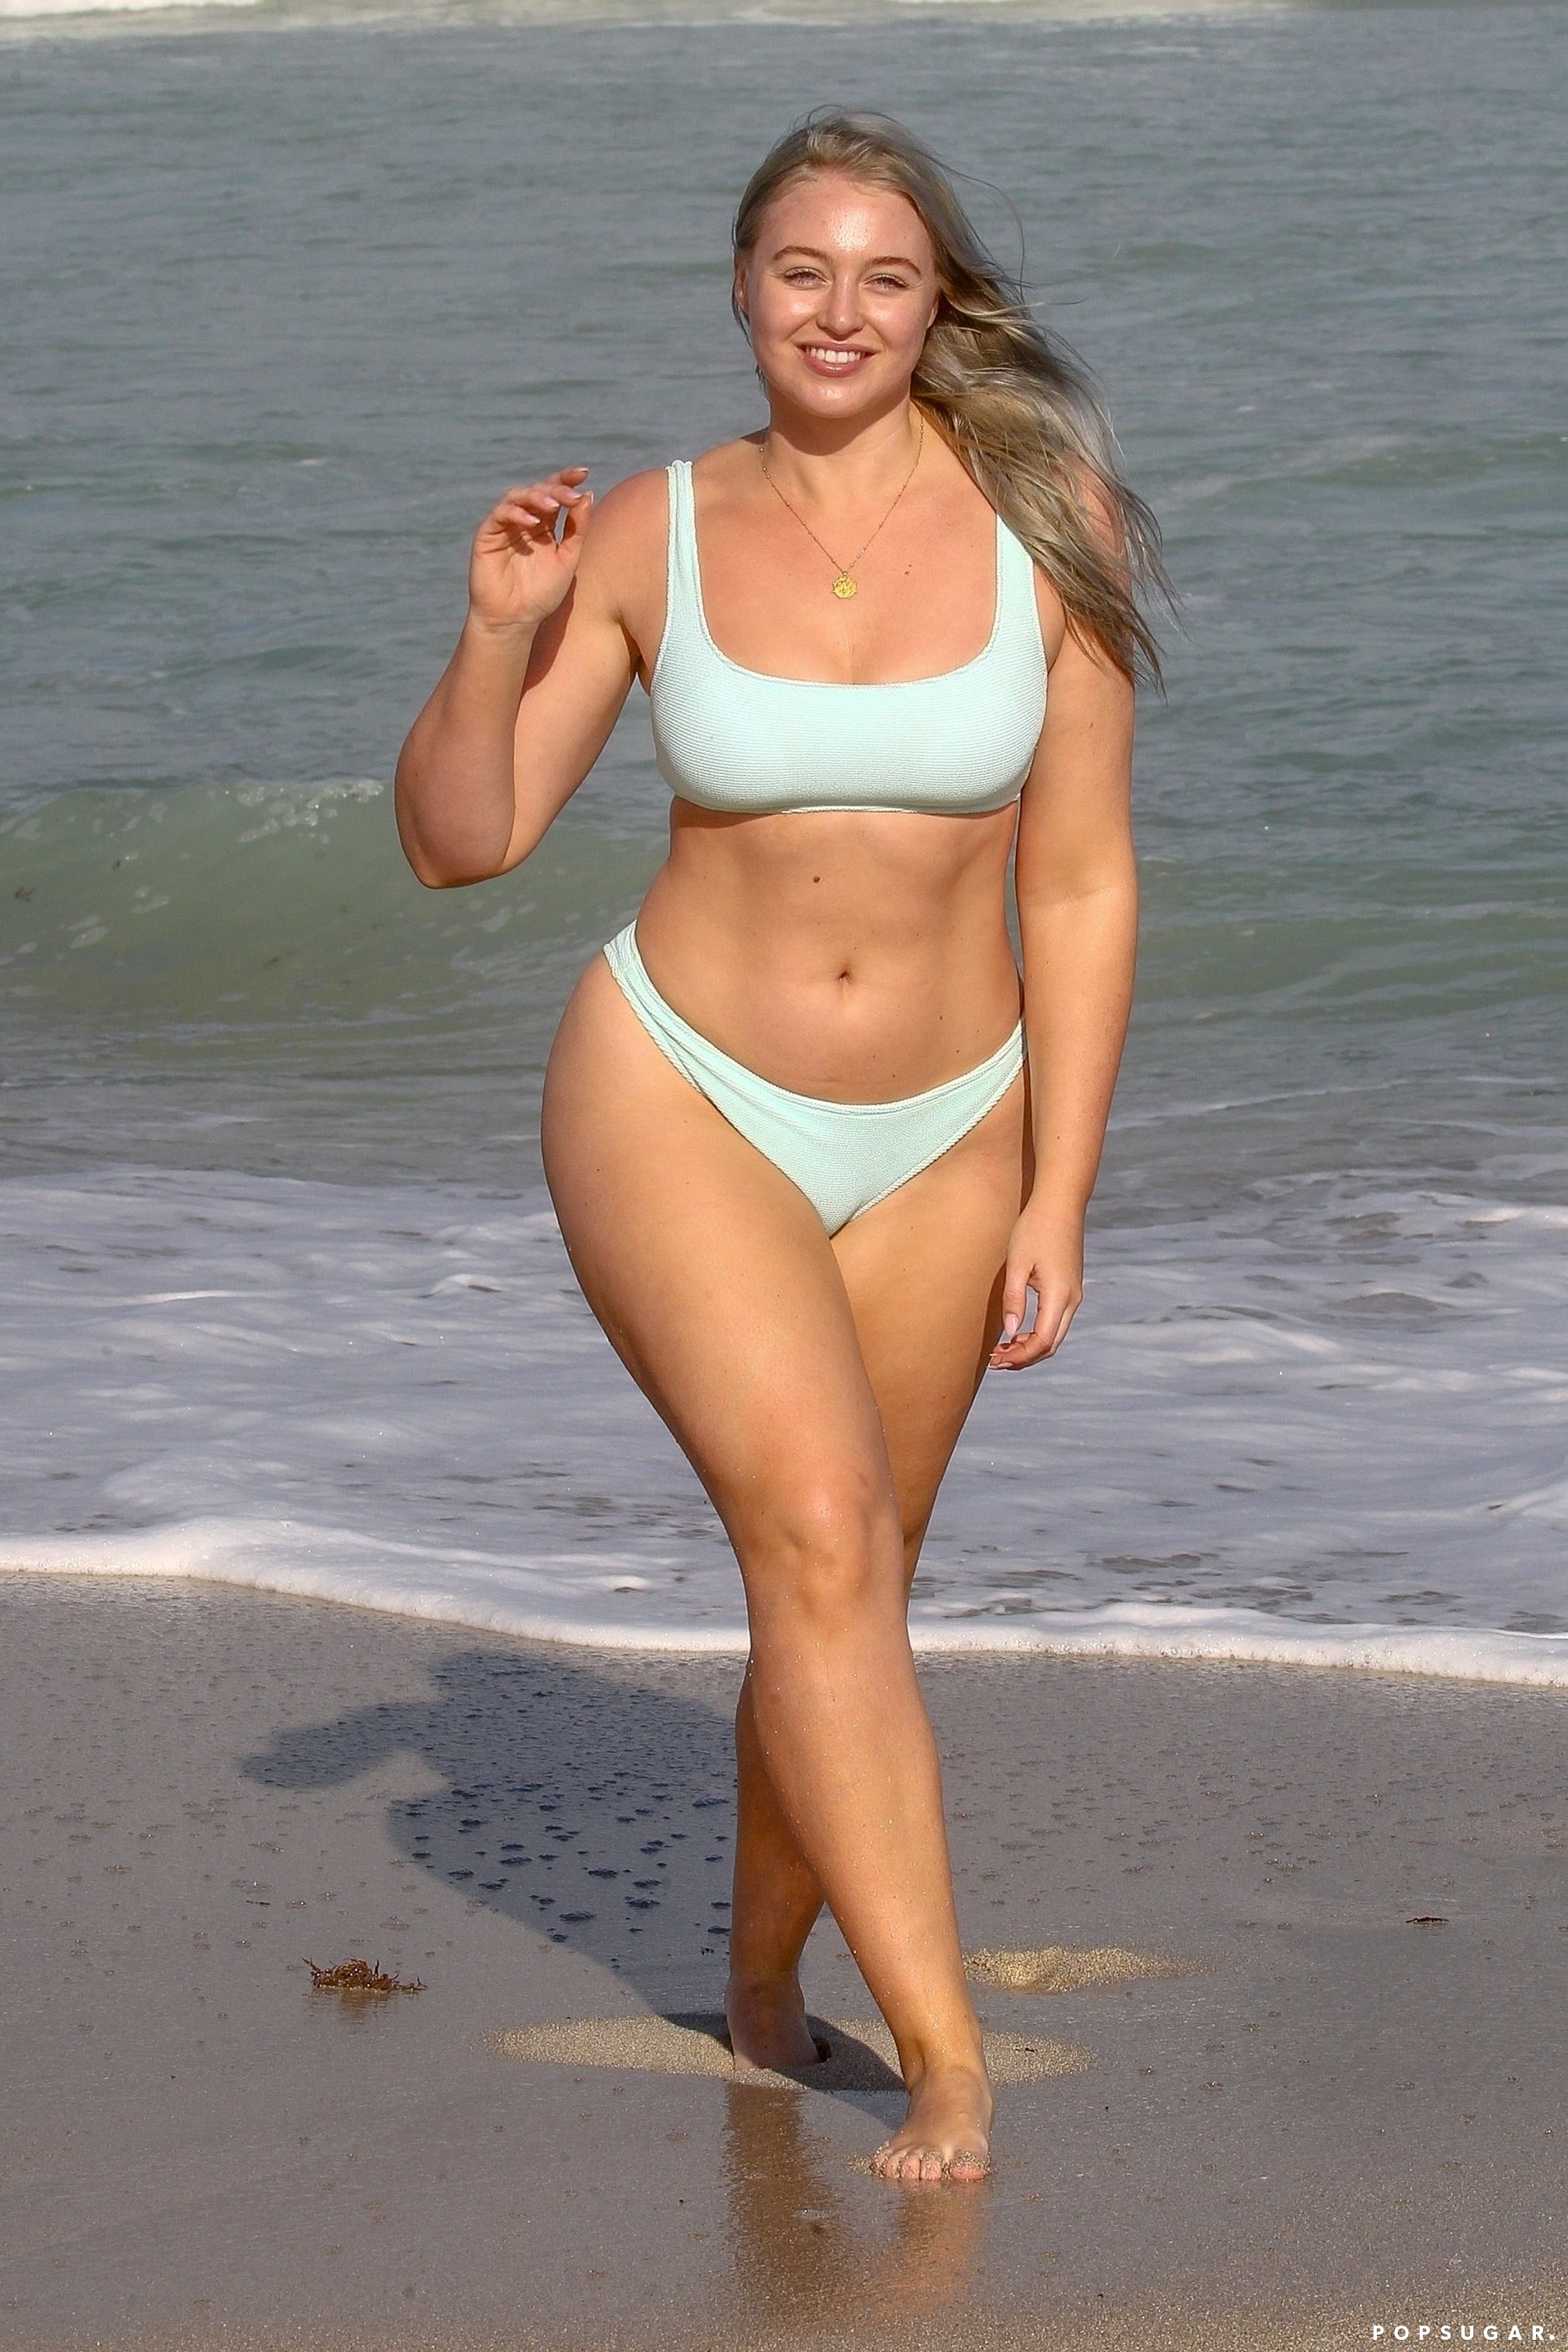 Iskra Lawrence Sex Vodeos - Iskra Lawrence Bikini Pictures in Miami January 2019 | POPSUGAR Celebrity